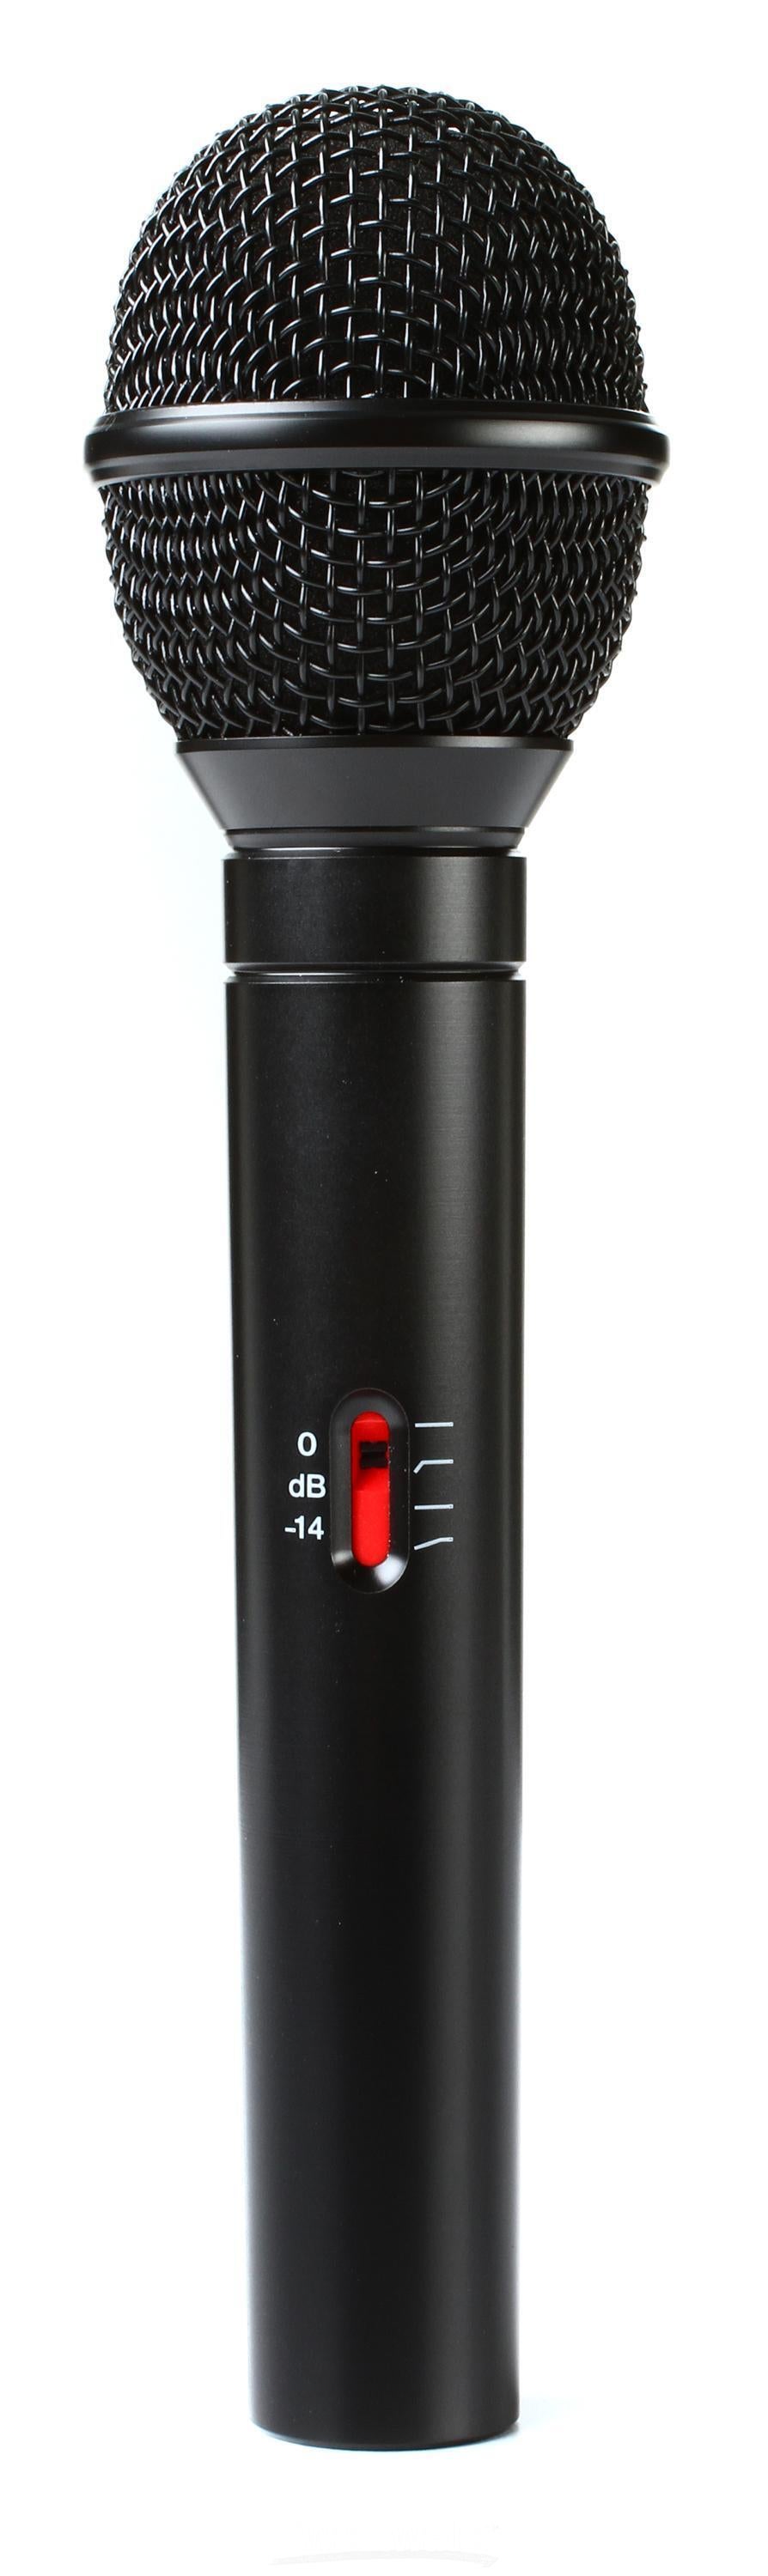 AKG C 535 EB Handheld Condenser Microphone